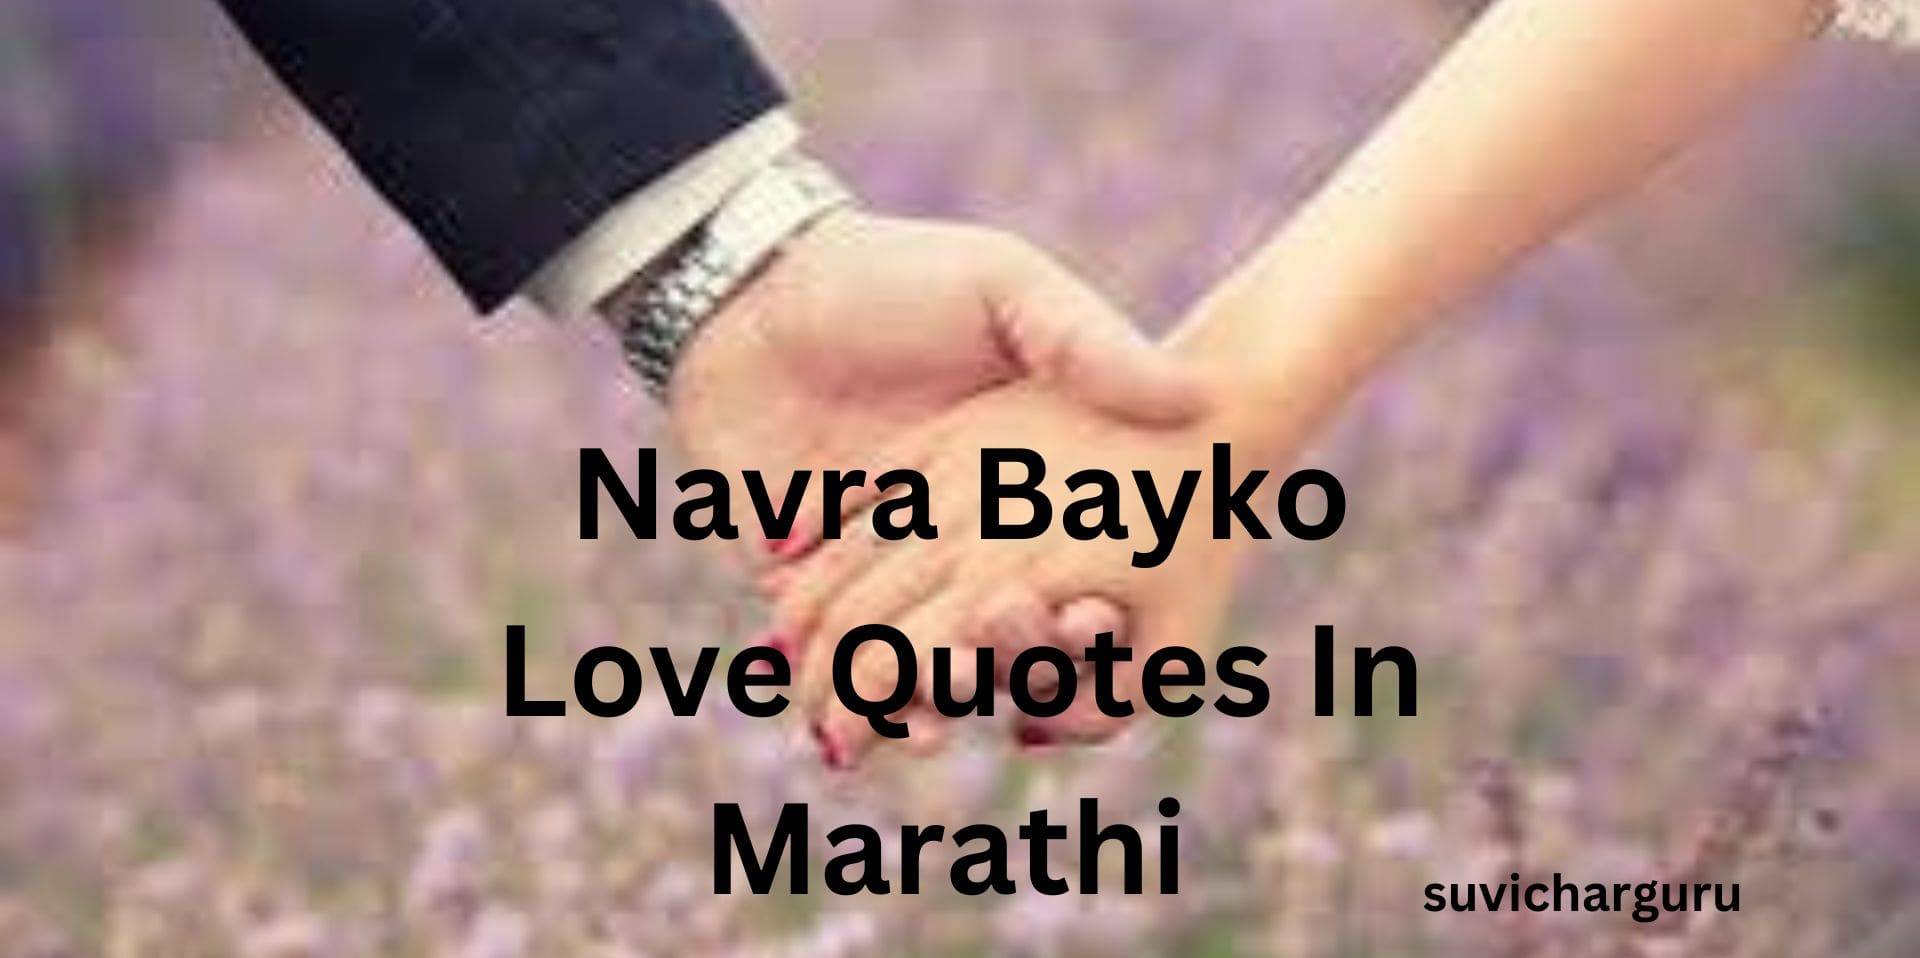 Navra bayko love quotes in marathi | 200+नवरा बायको लव कोट्स